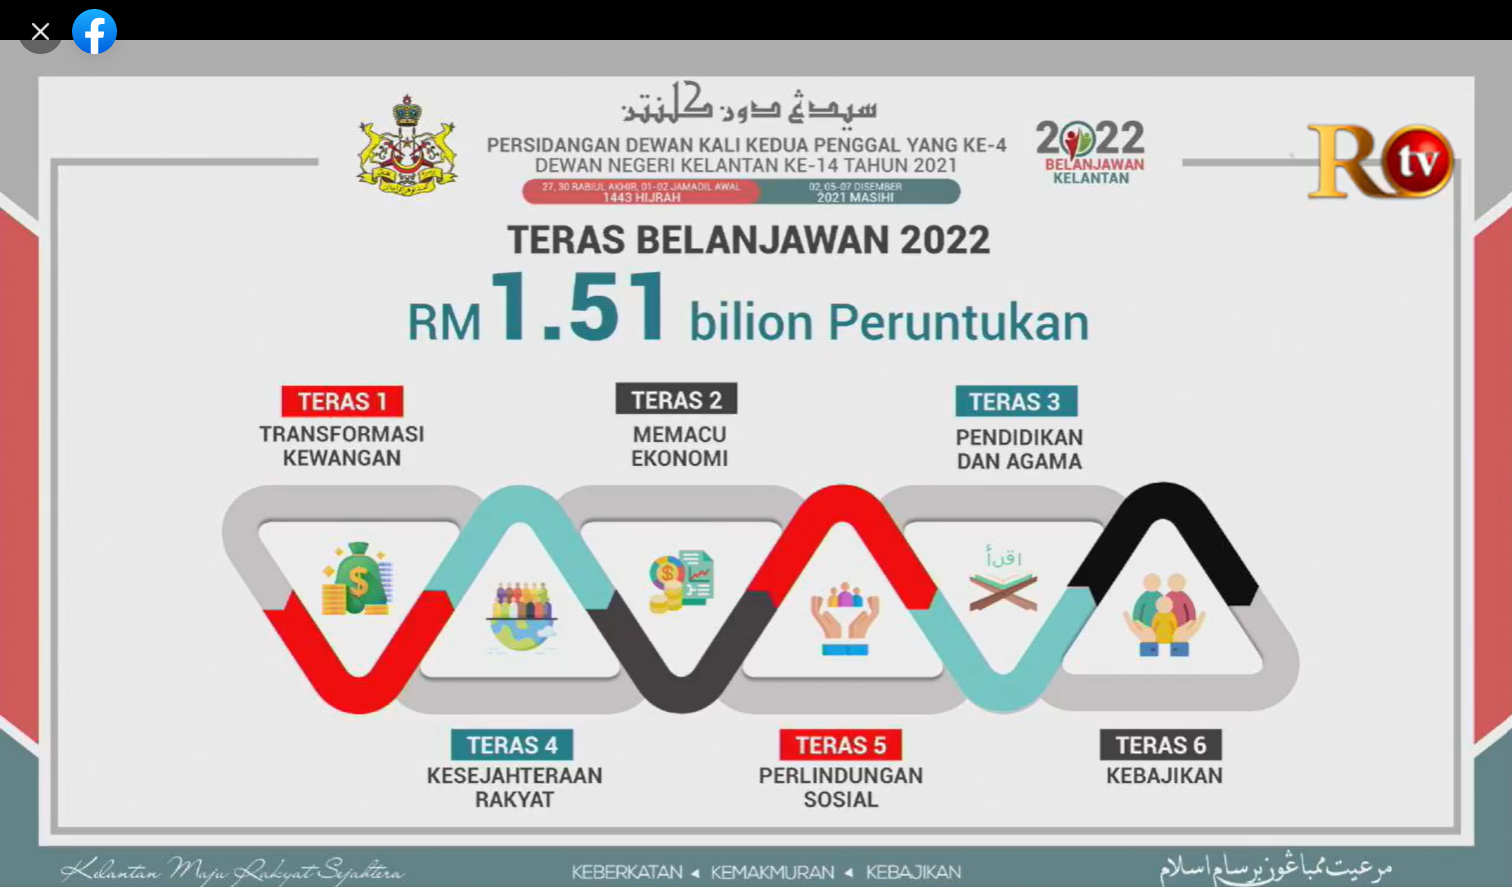 Intipati belanjawan 2022